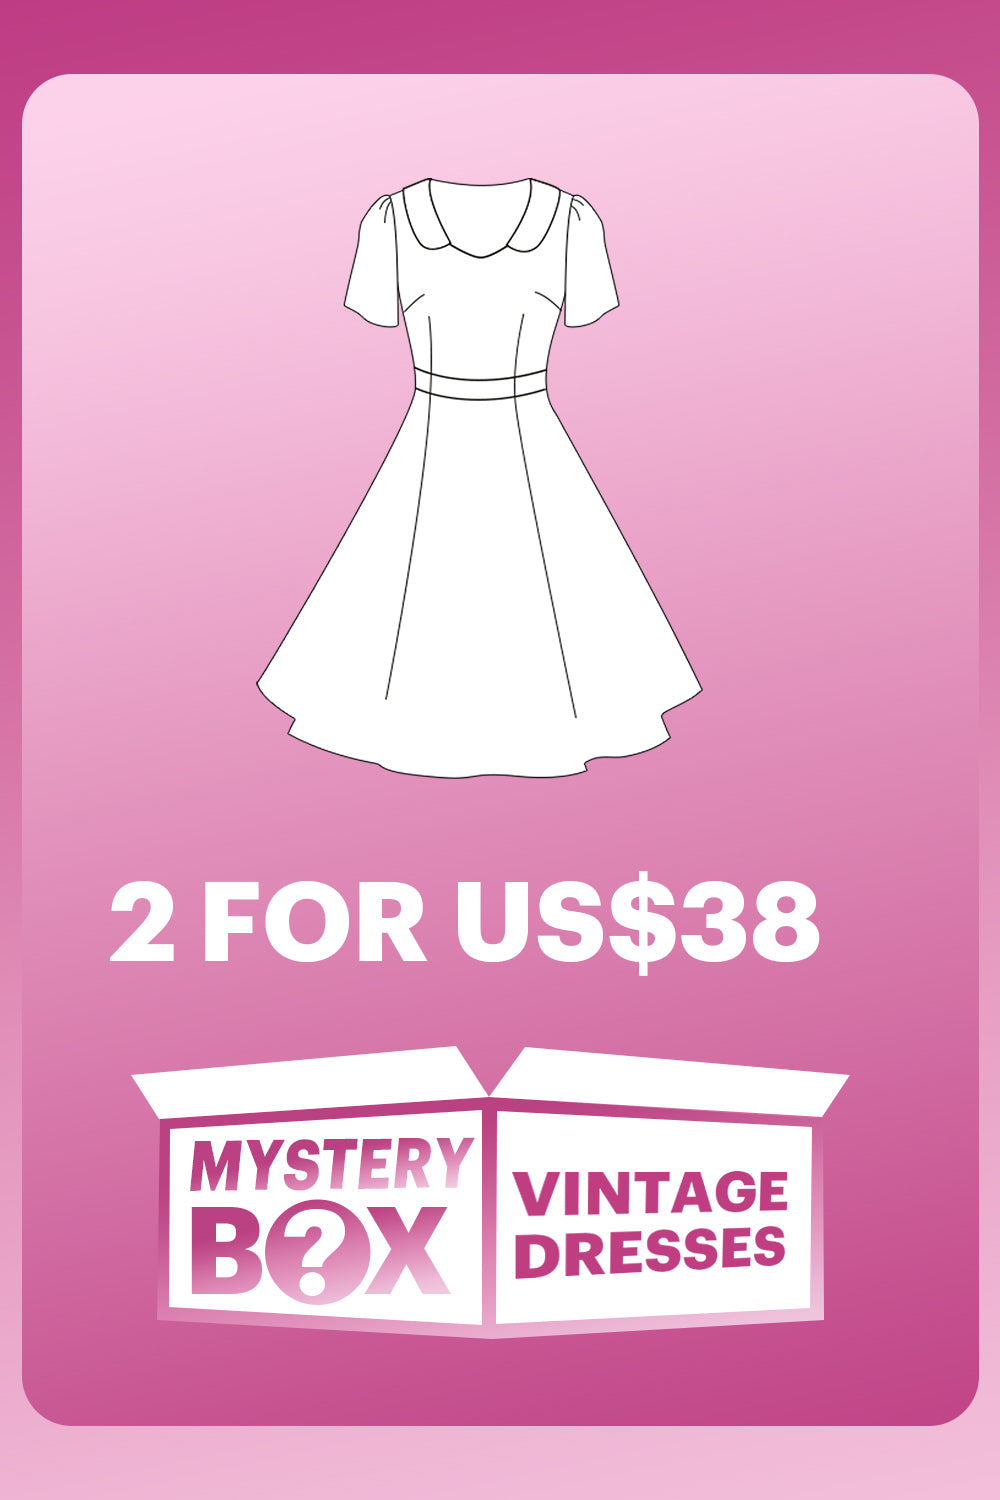 ZAPAKA MYSTERY BOX of 2Pc Vintage Dresses